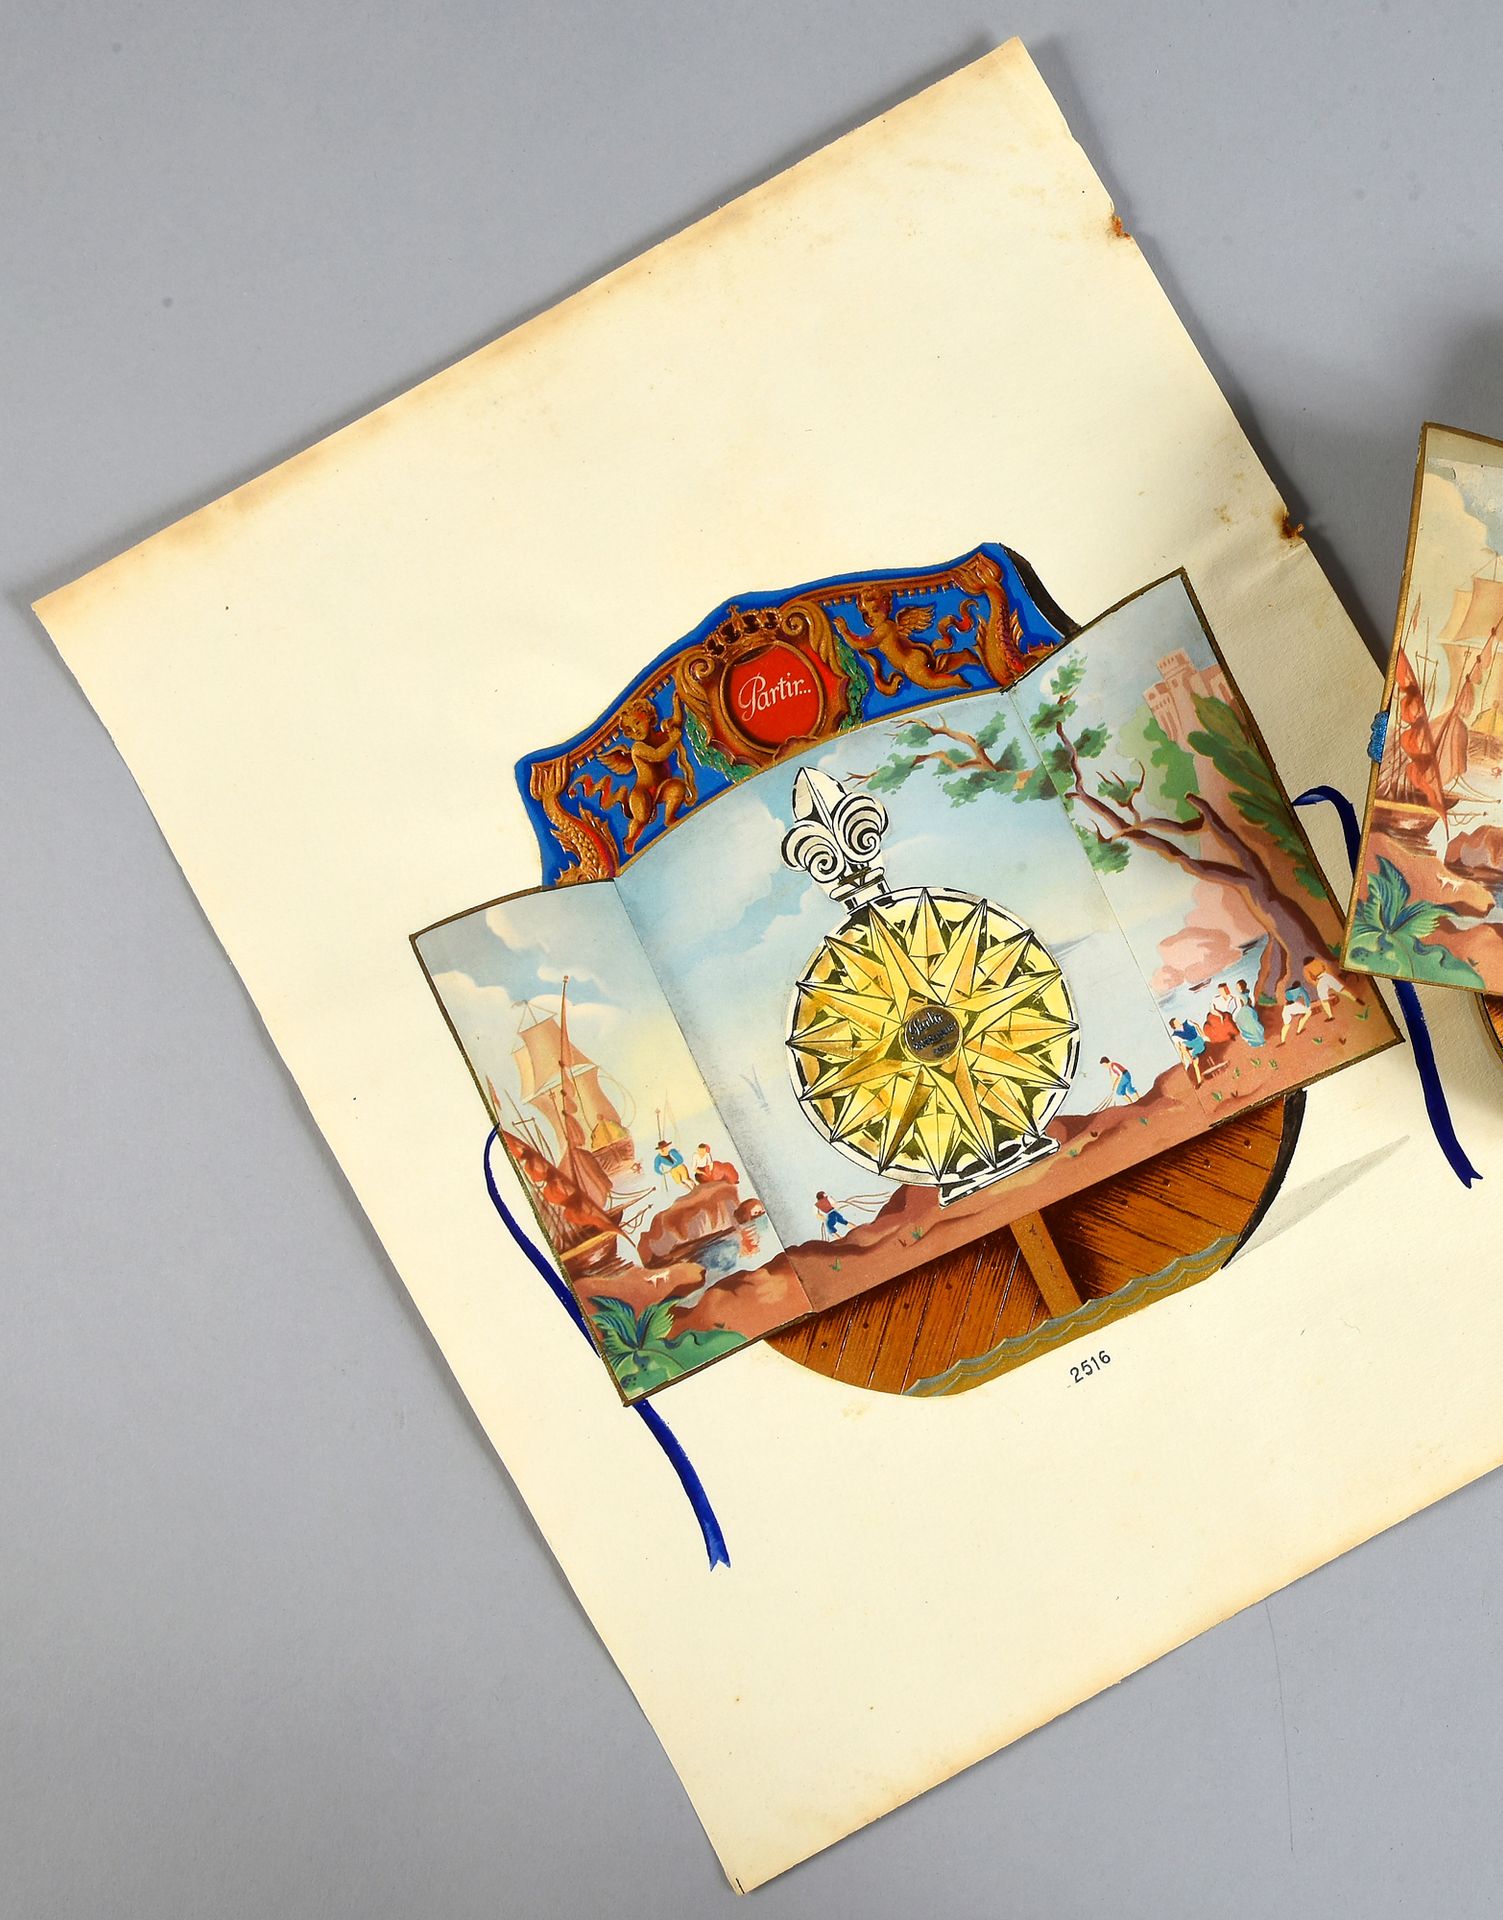 Roger & Gallet - «Partir» - (1946) 
用墨水和水粉绘制的图画，用两片叶子拼贴的盒子封面显示 "Partir "瓶子在其打开的盒&hellip;